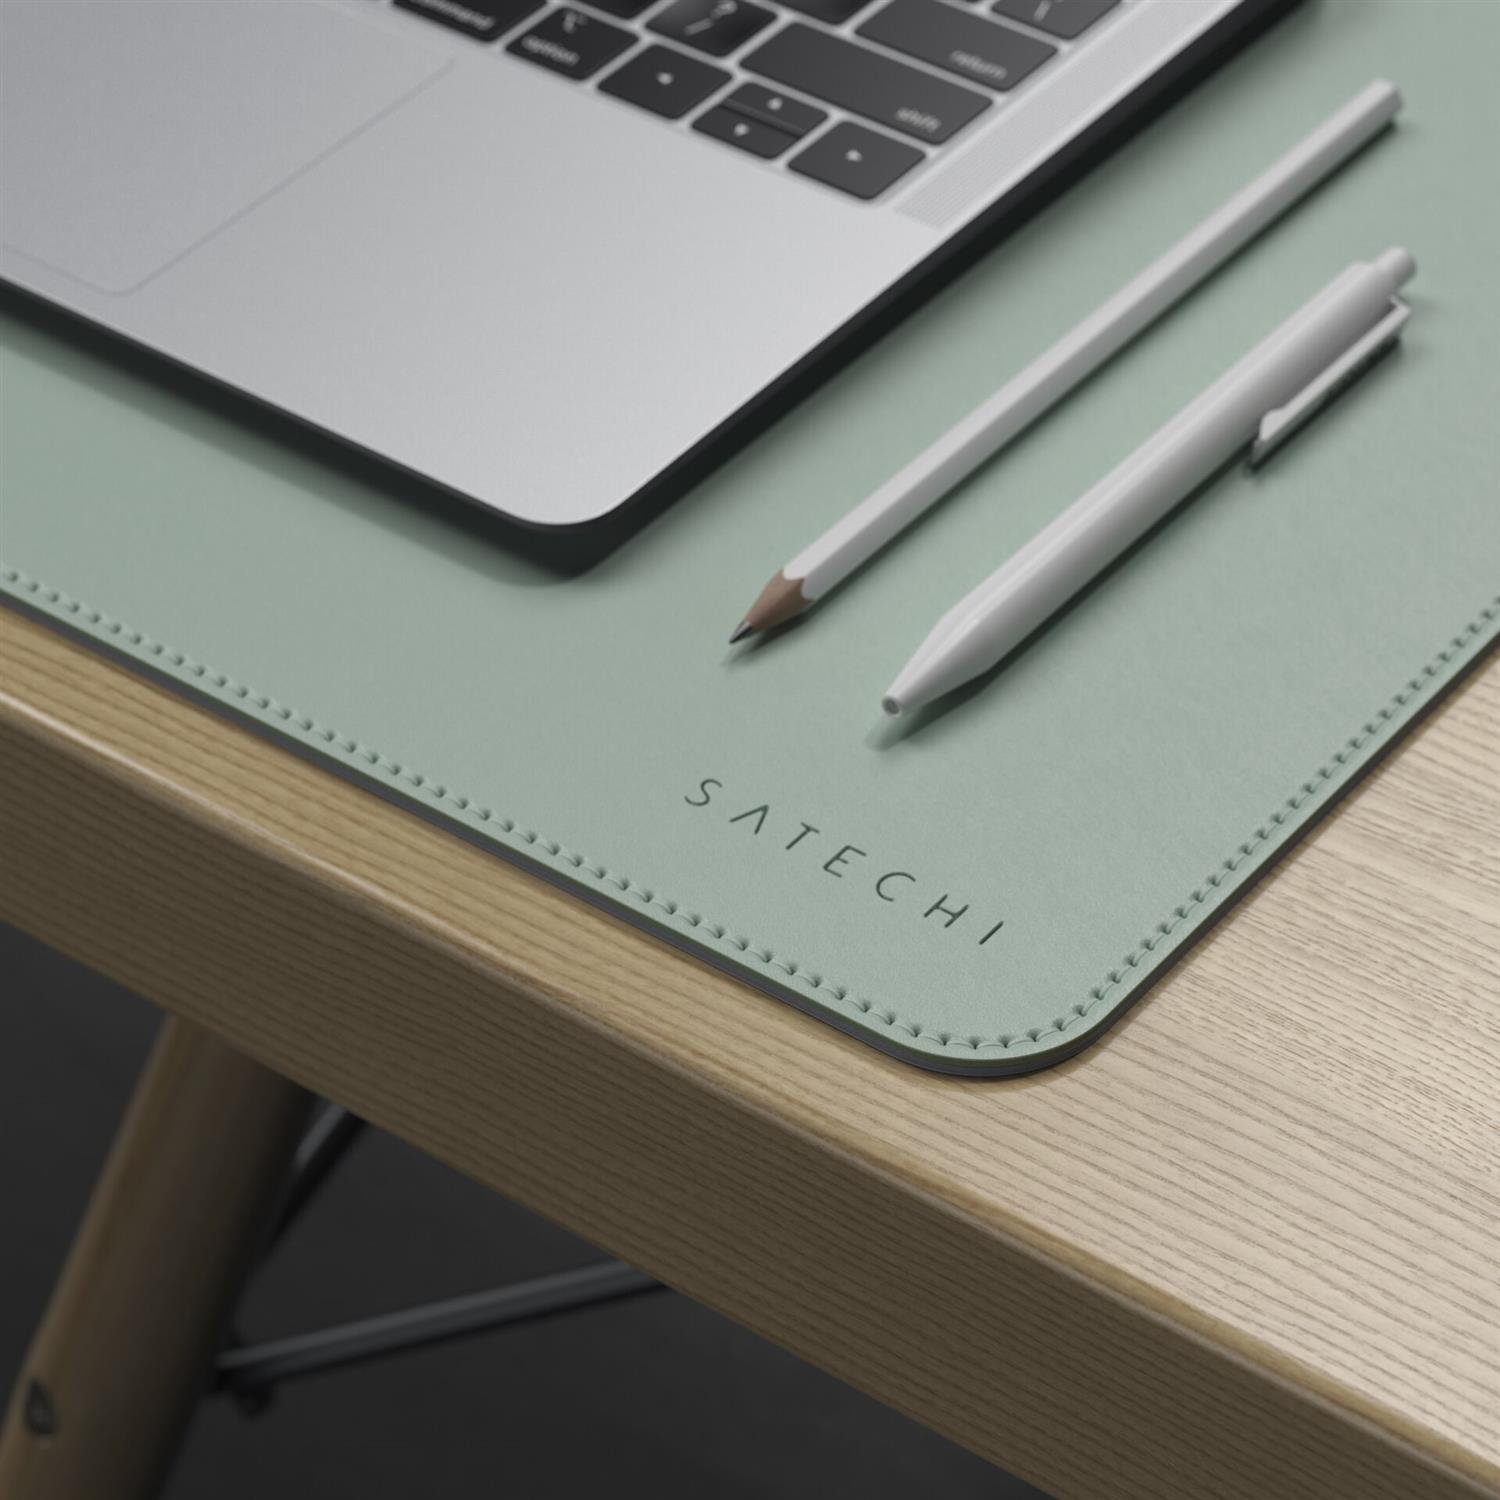 Satechi Eco Leather Desk Mat - Blau/Grün